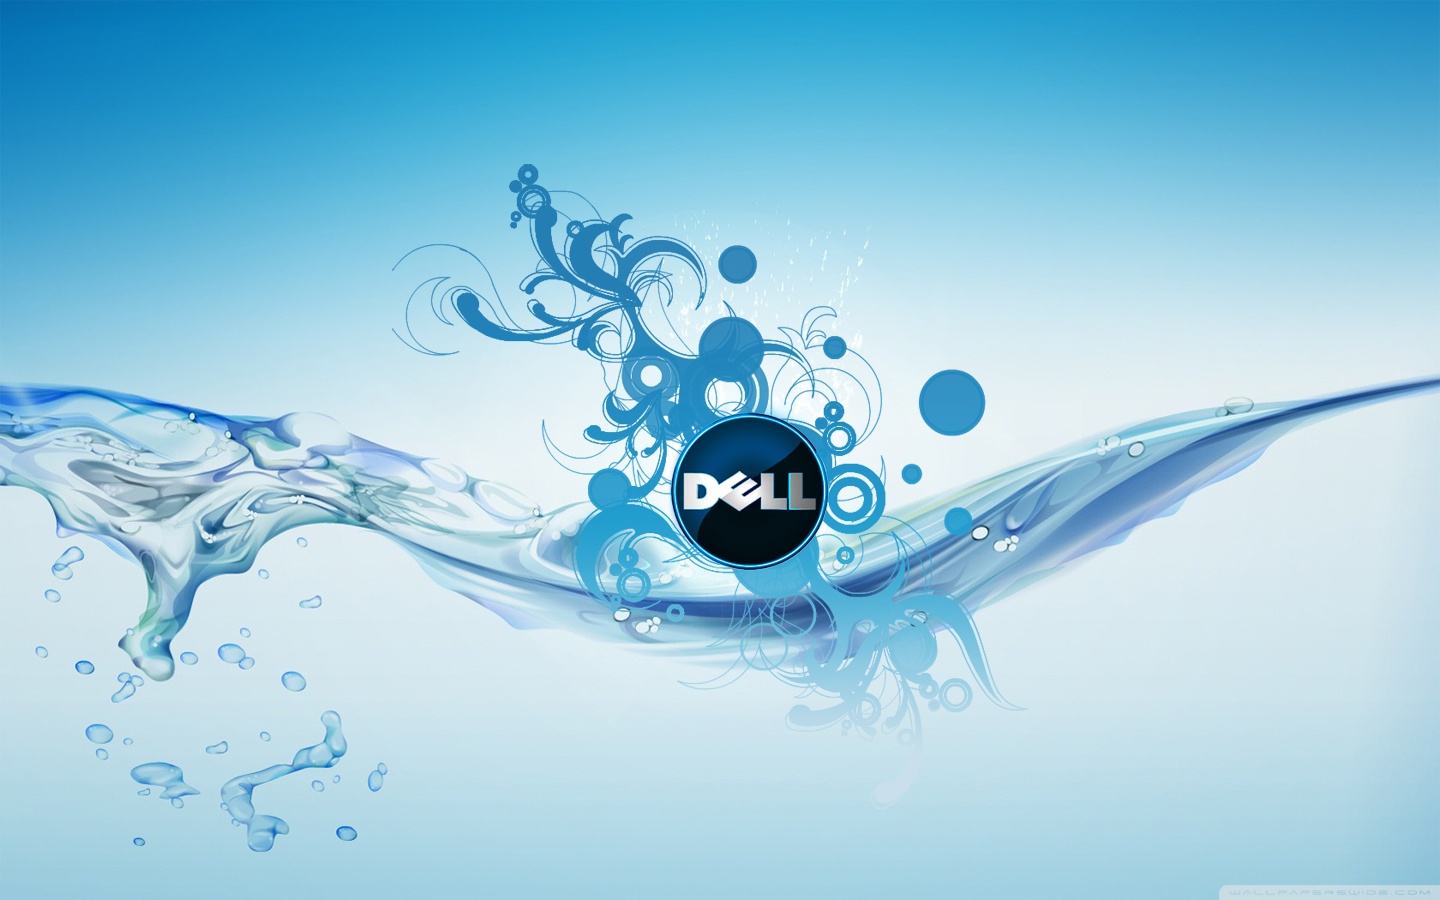 Dell Co Ultra HD Desktop Background Wallpaper for 4K UHD TV : Tablet :  Smartphone